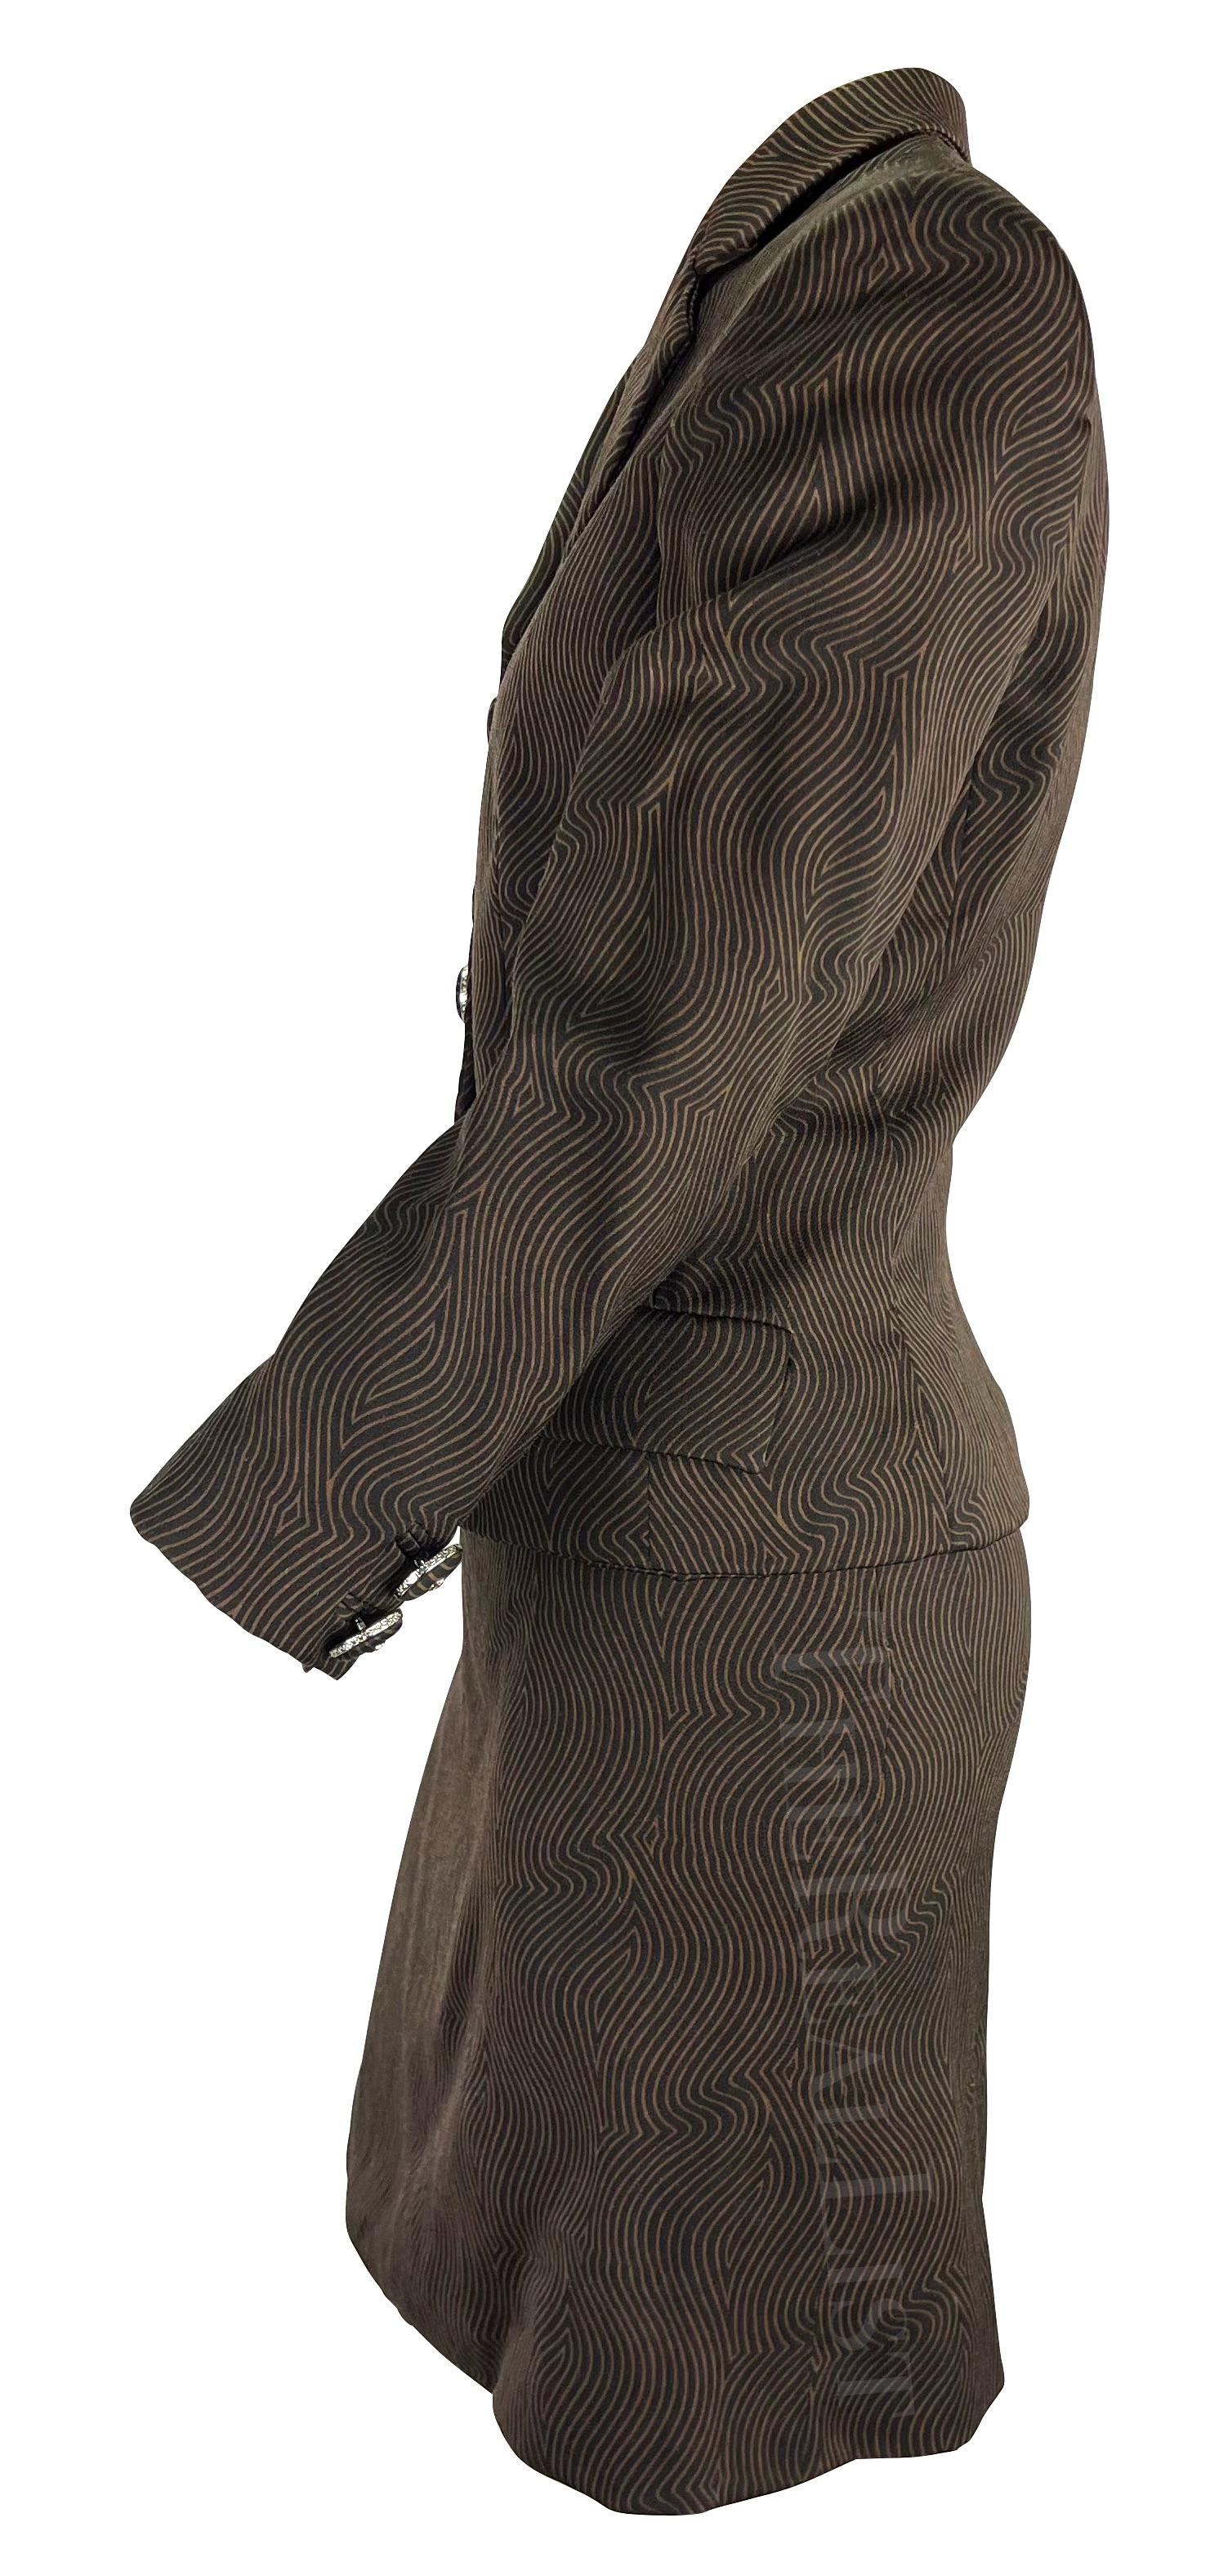 Women's S/S 1996 Gianni Versace Black Brown Abstract Op-Art Print Medusa Belt Skirt Suit For Sale